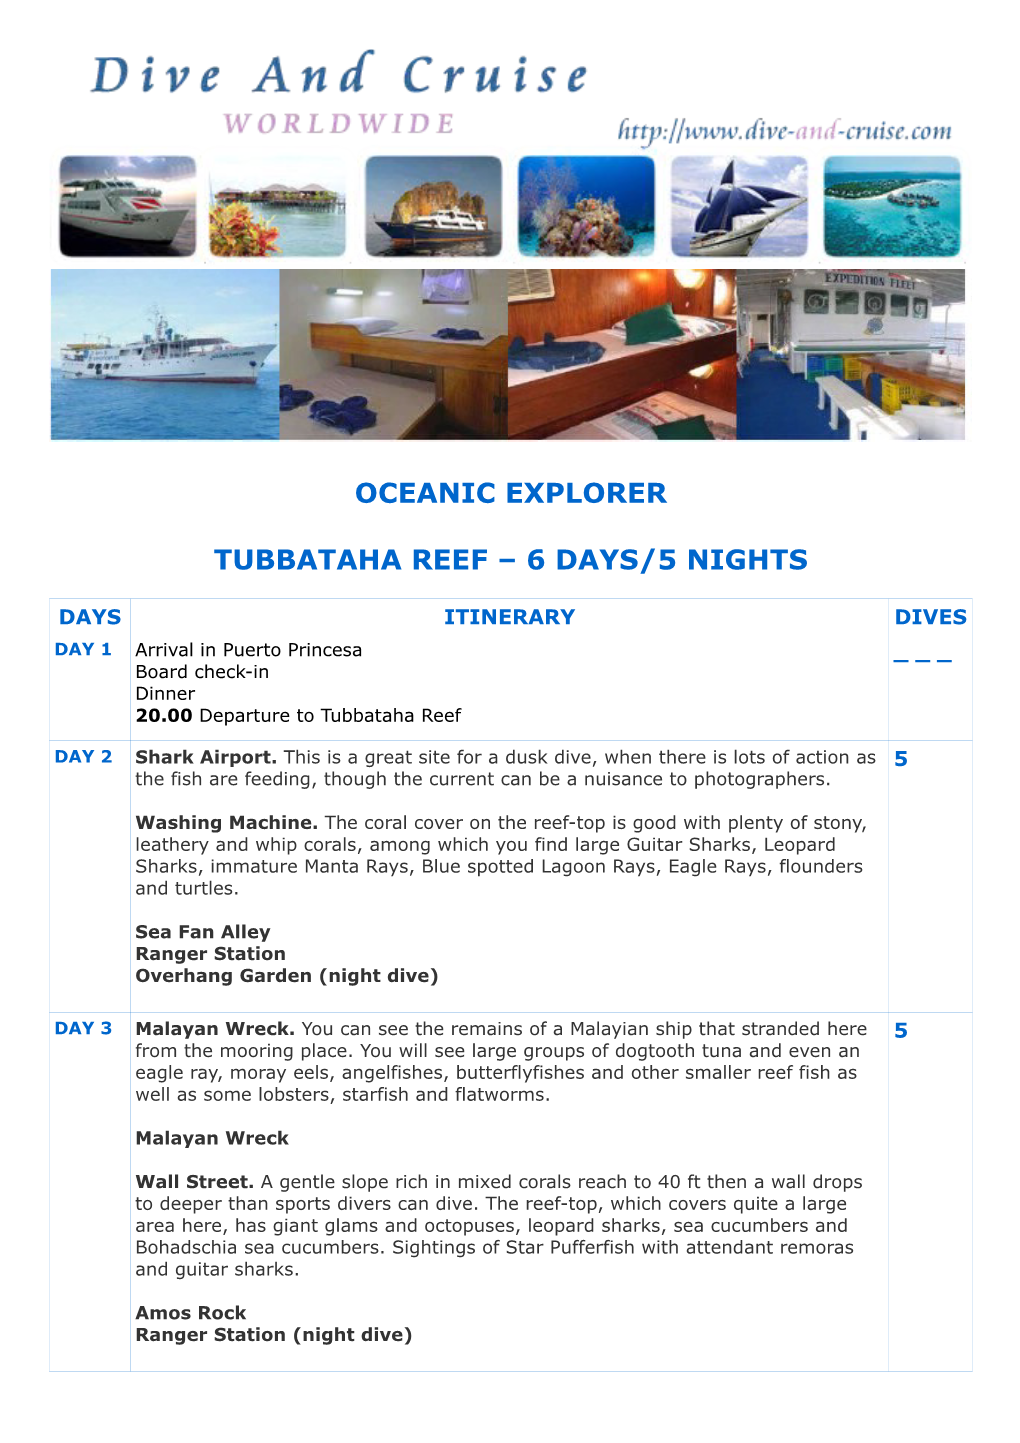 Oceanic Explorer Tubbataha Reef – 6 Days/5 Nights